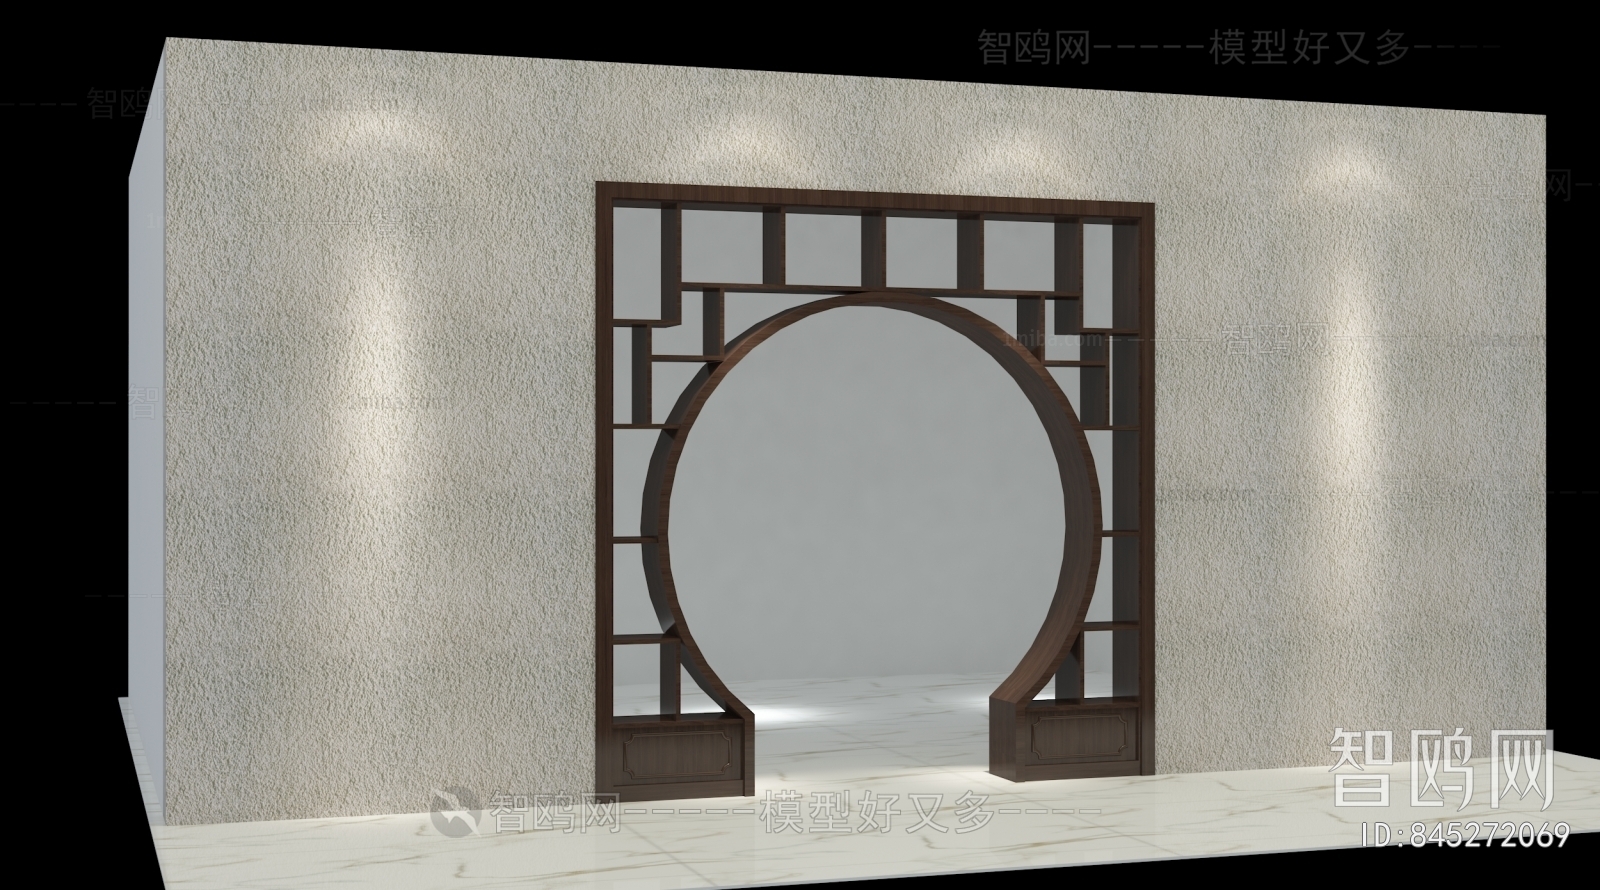 New Chinese Style Door